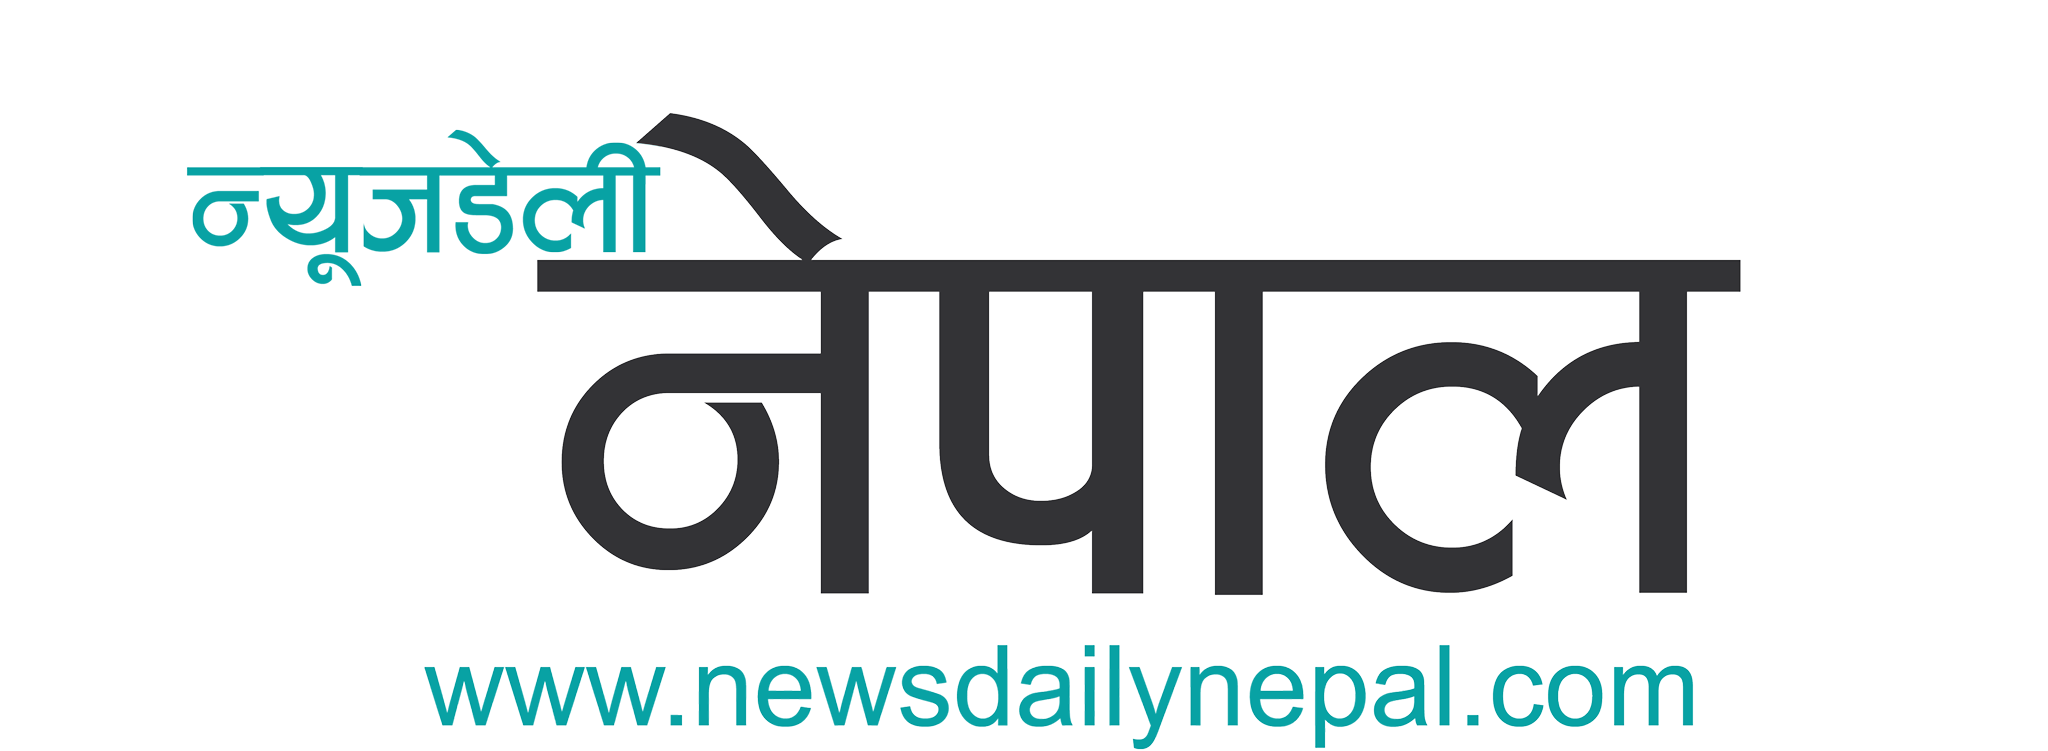 News Daily Nepal